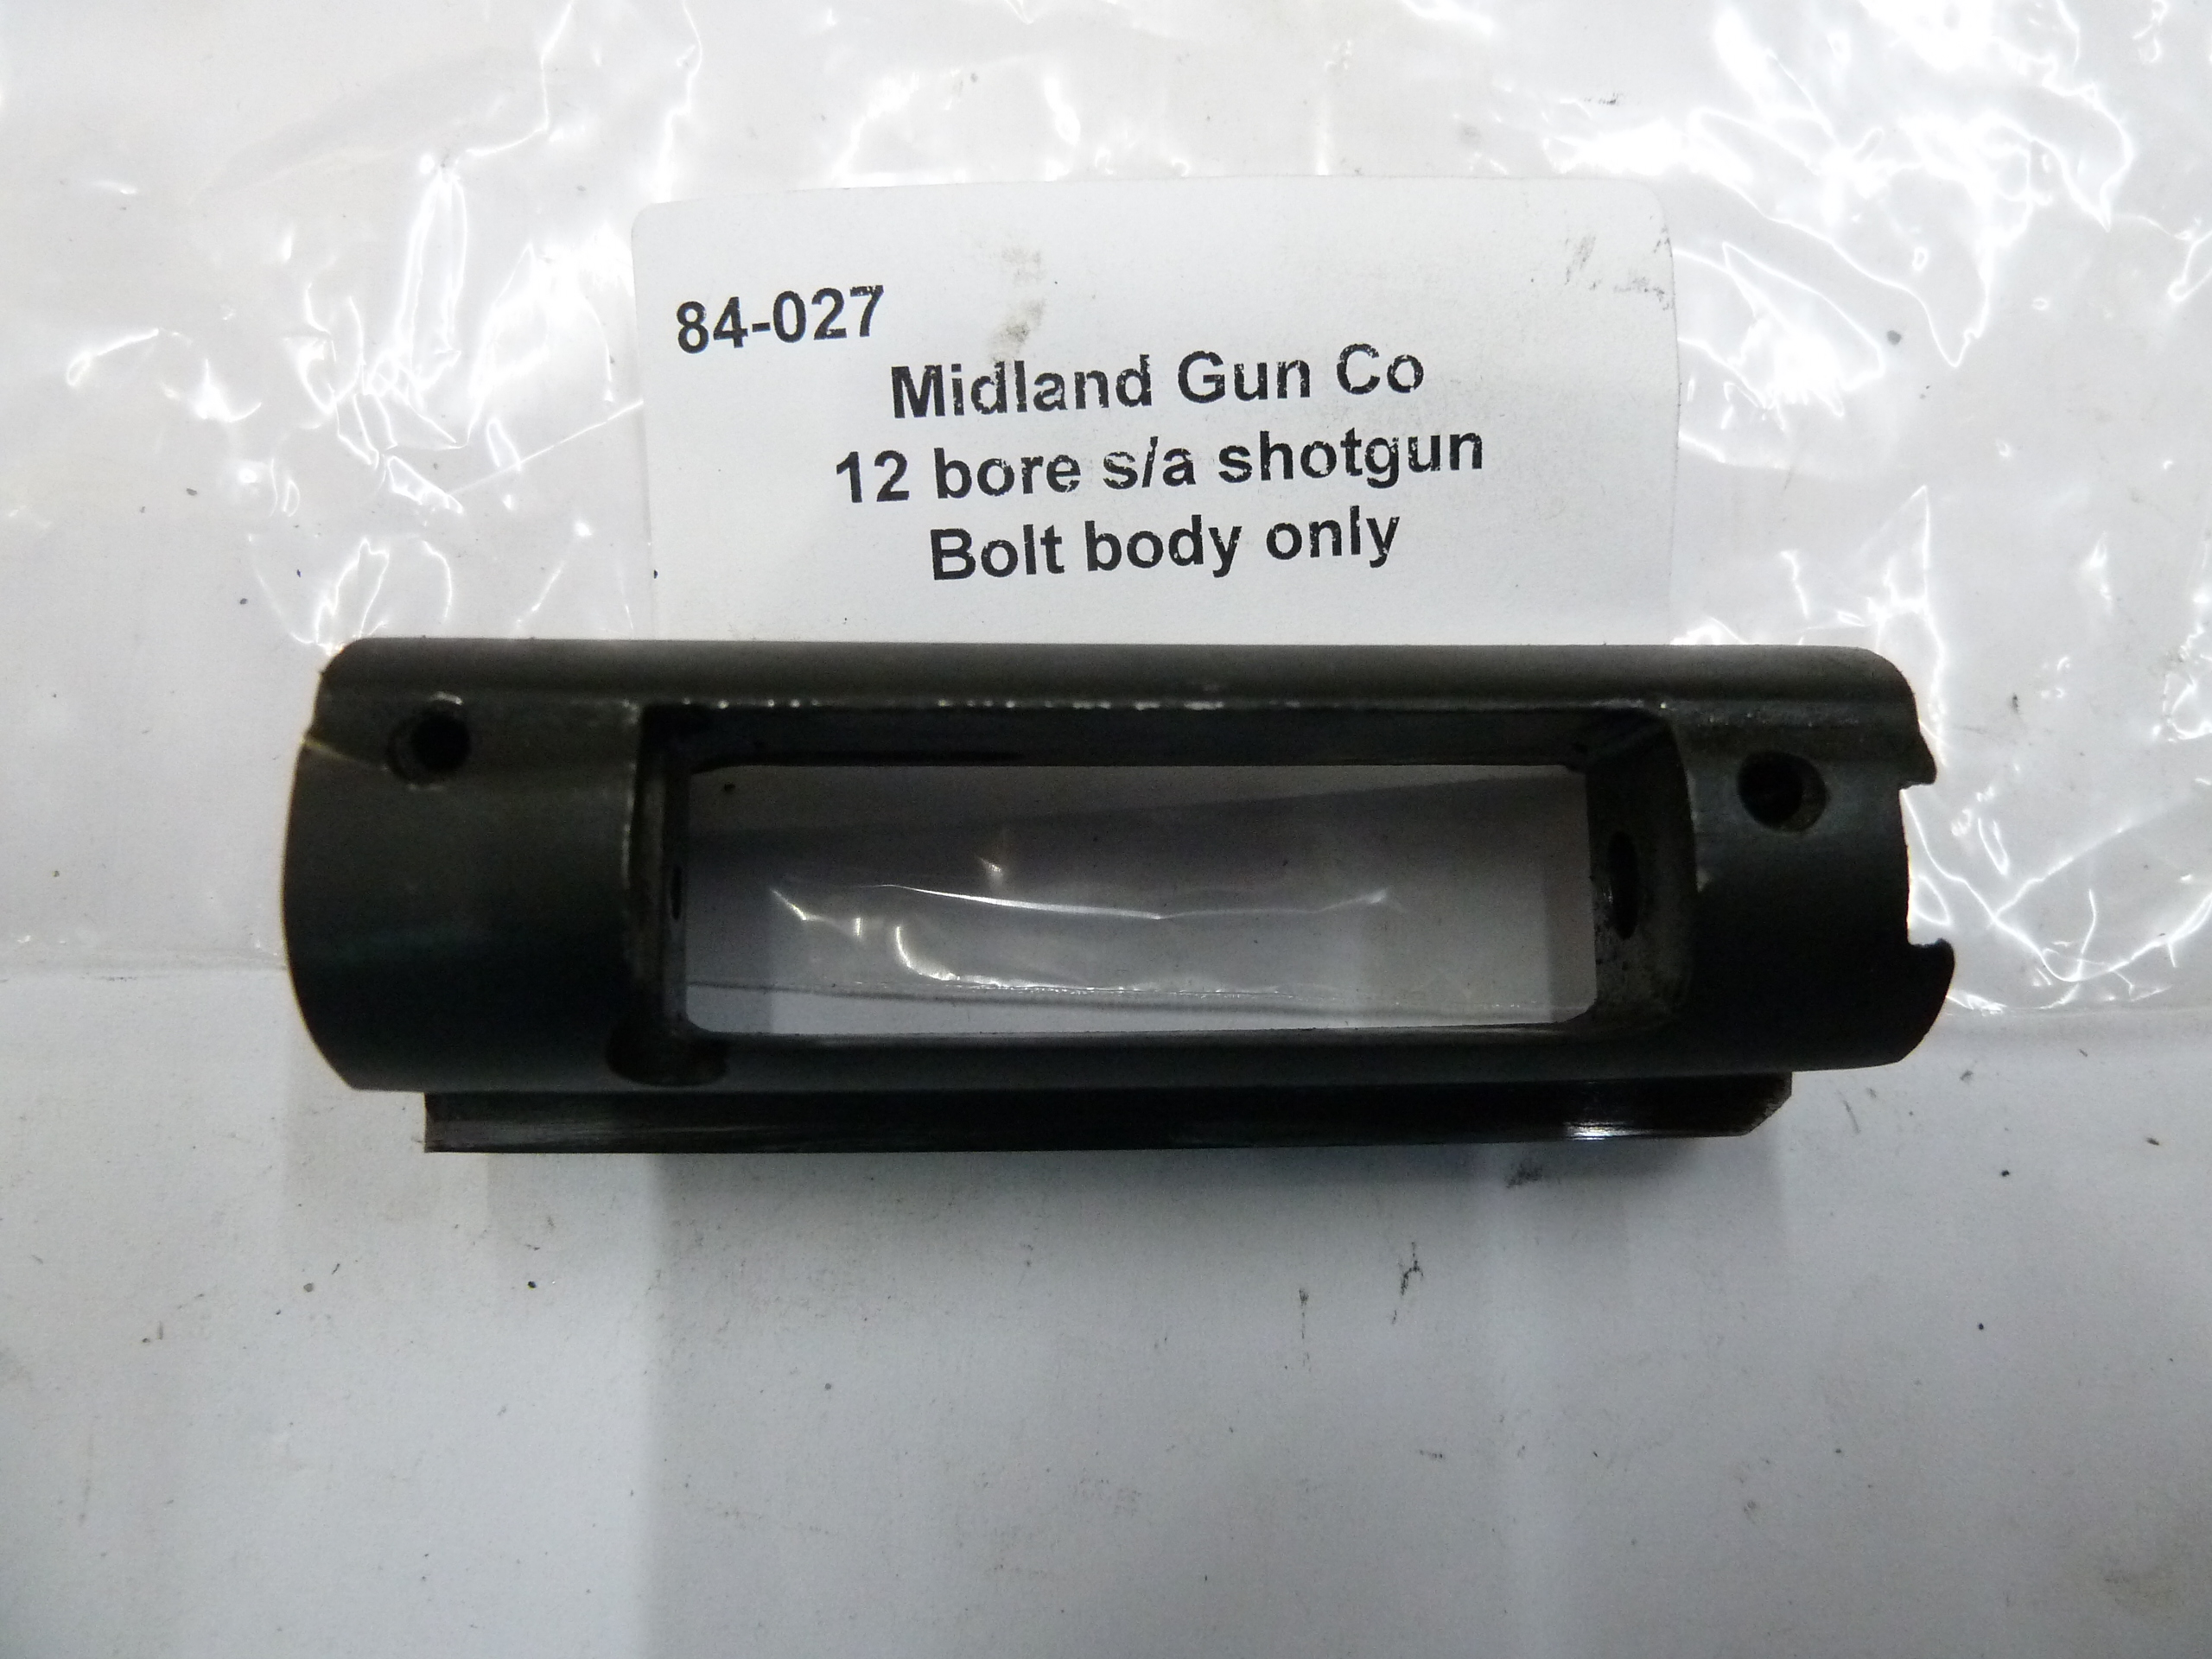 Midland Gun Co bolt body only